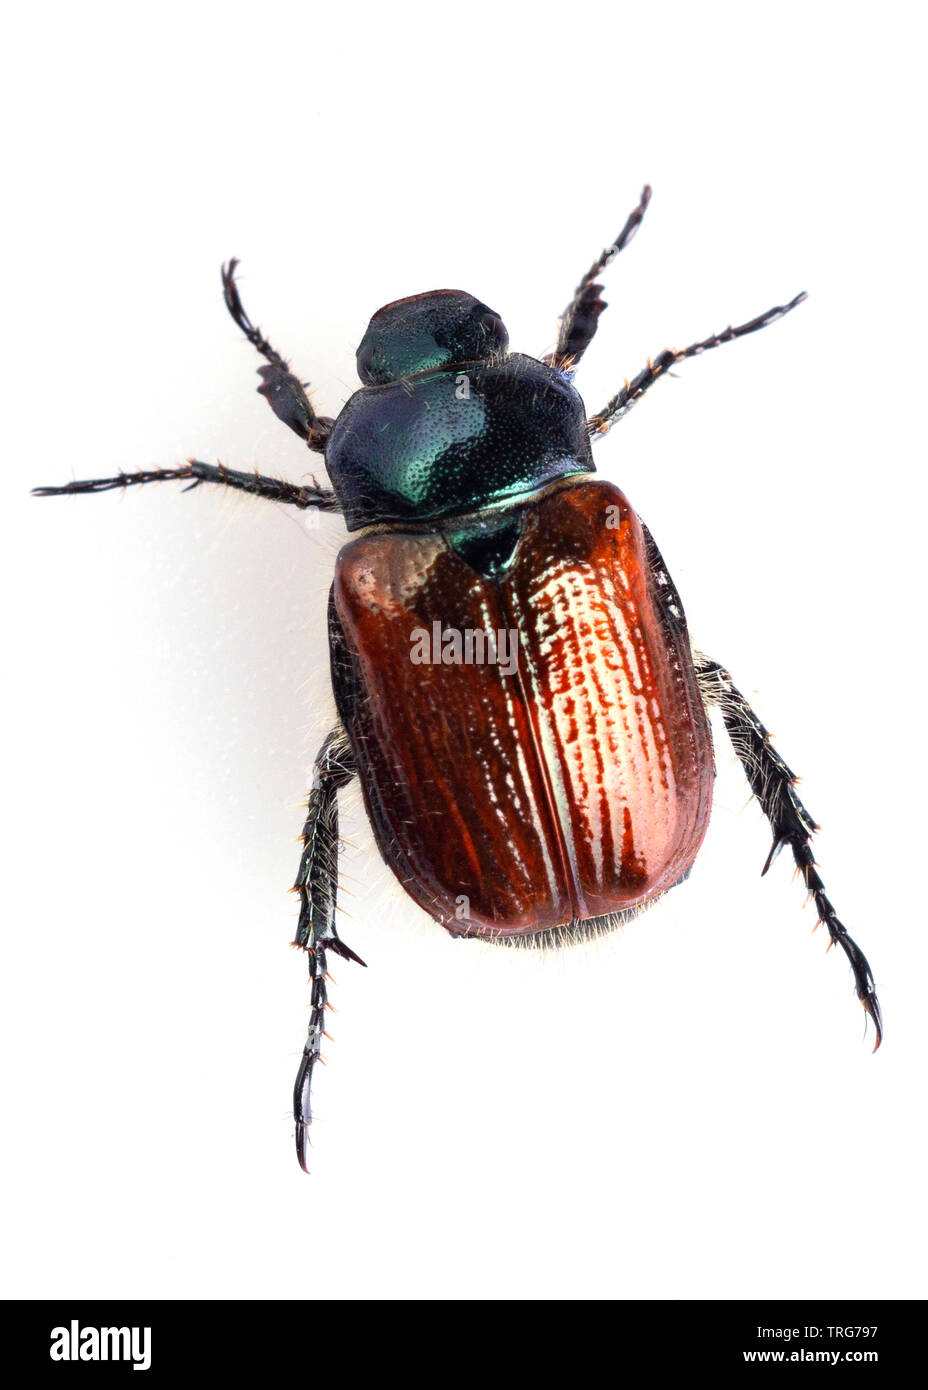 A living specimen of the Agonum sexpunctatum beetle from Gorleston in Norfolk, England Stock Photo